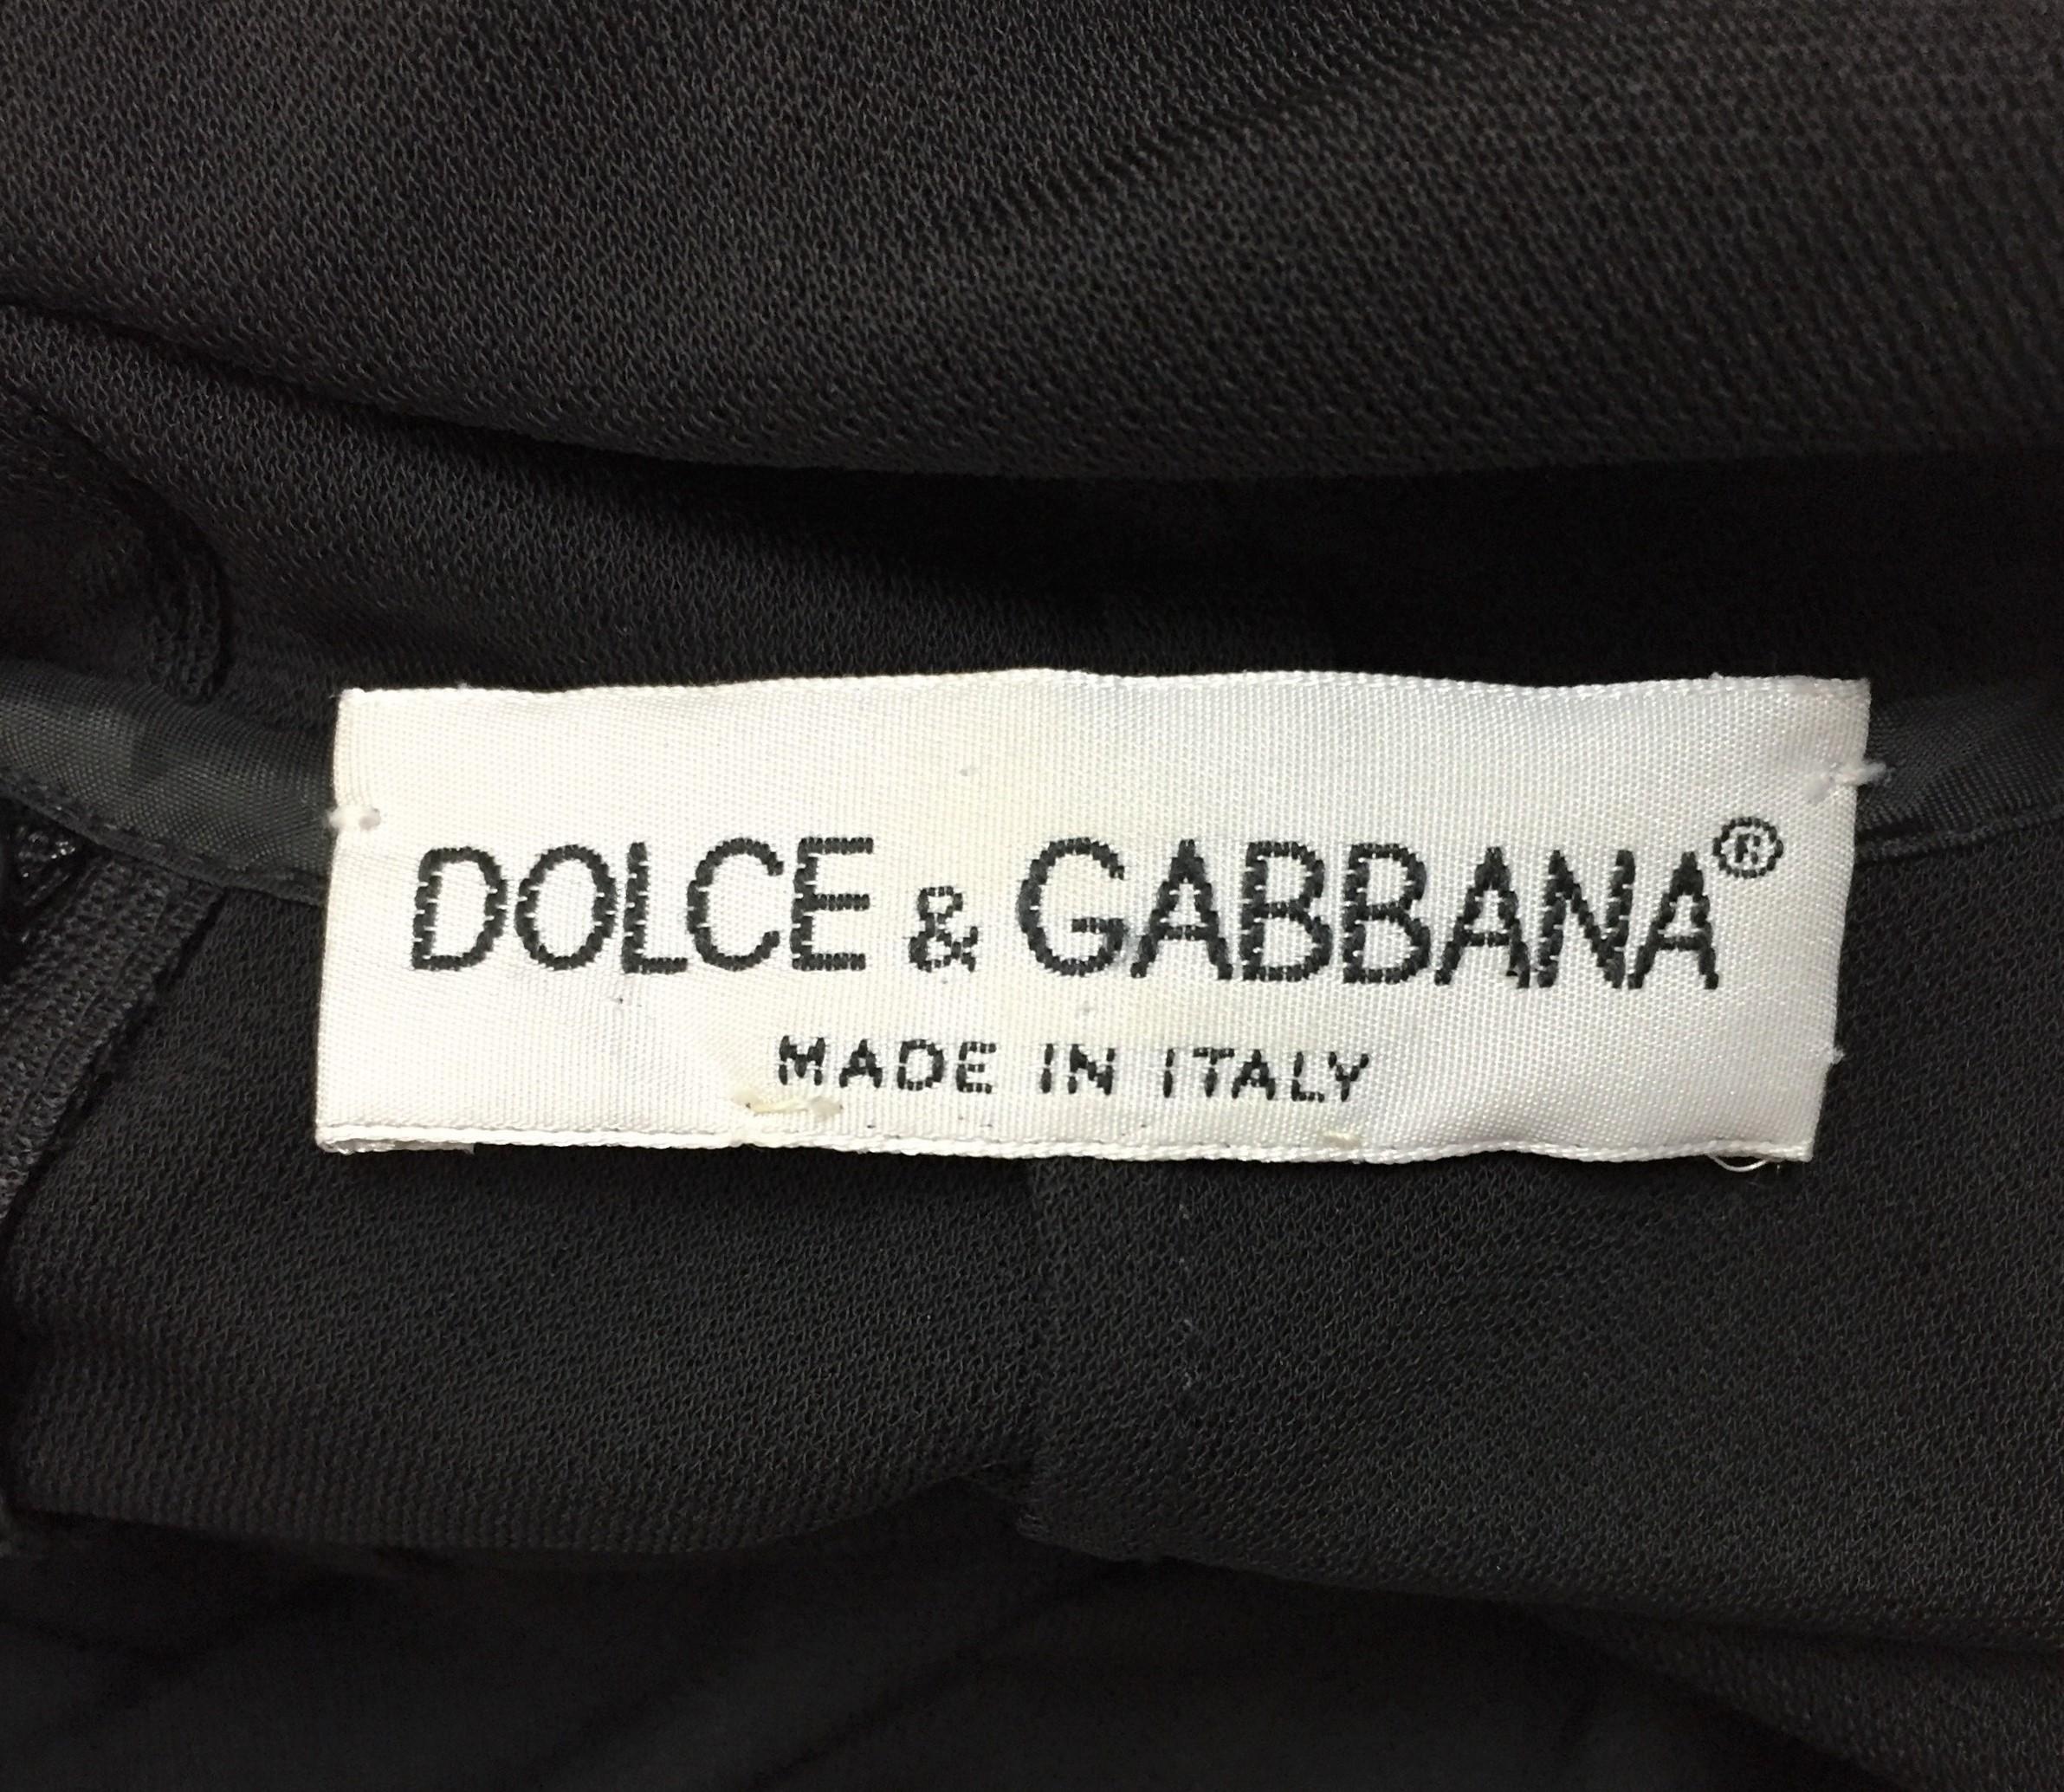 Women's S/S 1996 Dolce & Gabbana Runway Semi-Sheer Black Hooded Gown Dress 40